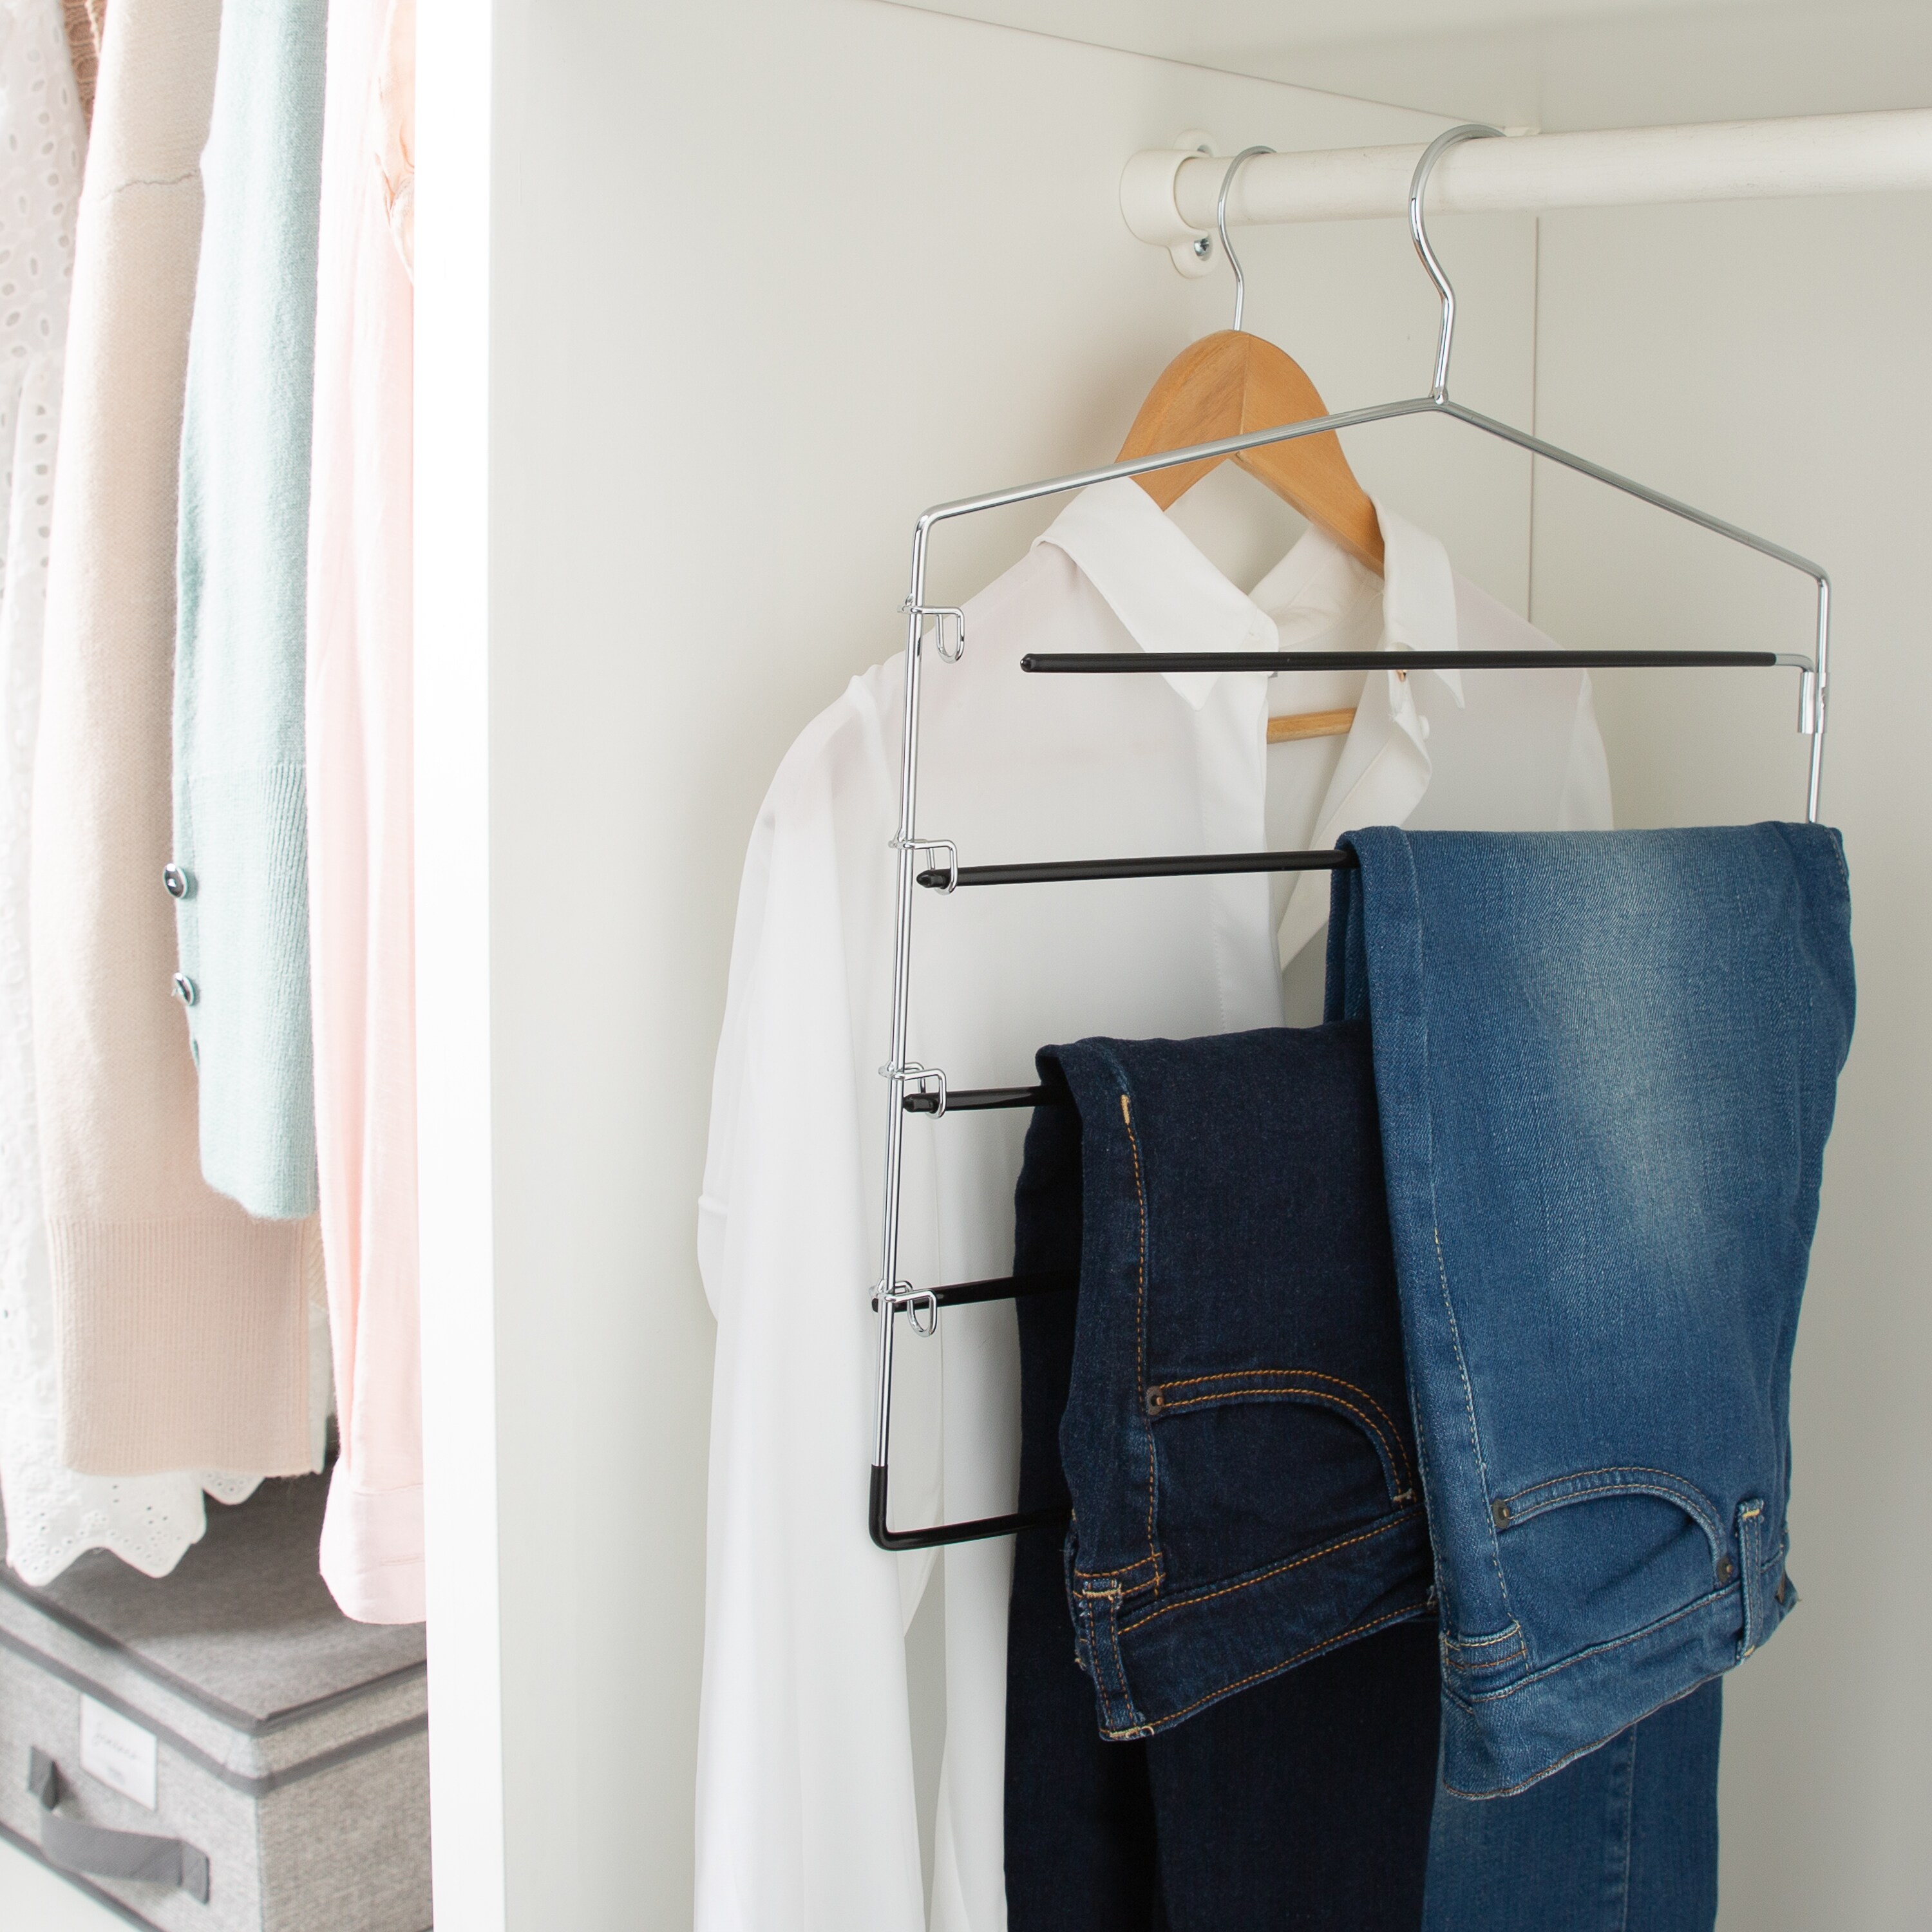 California Closets The Everyday System Wood Non-Slip Standard Hanger for Skirt/Pants (Set of 20) Martha Stewart Color: White